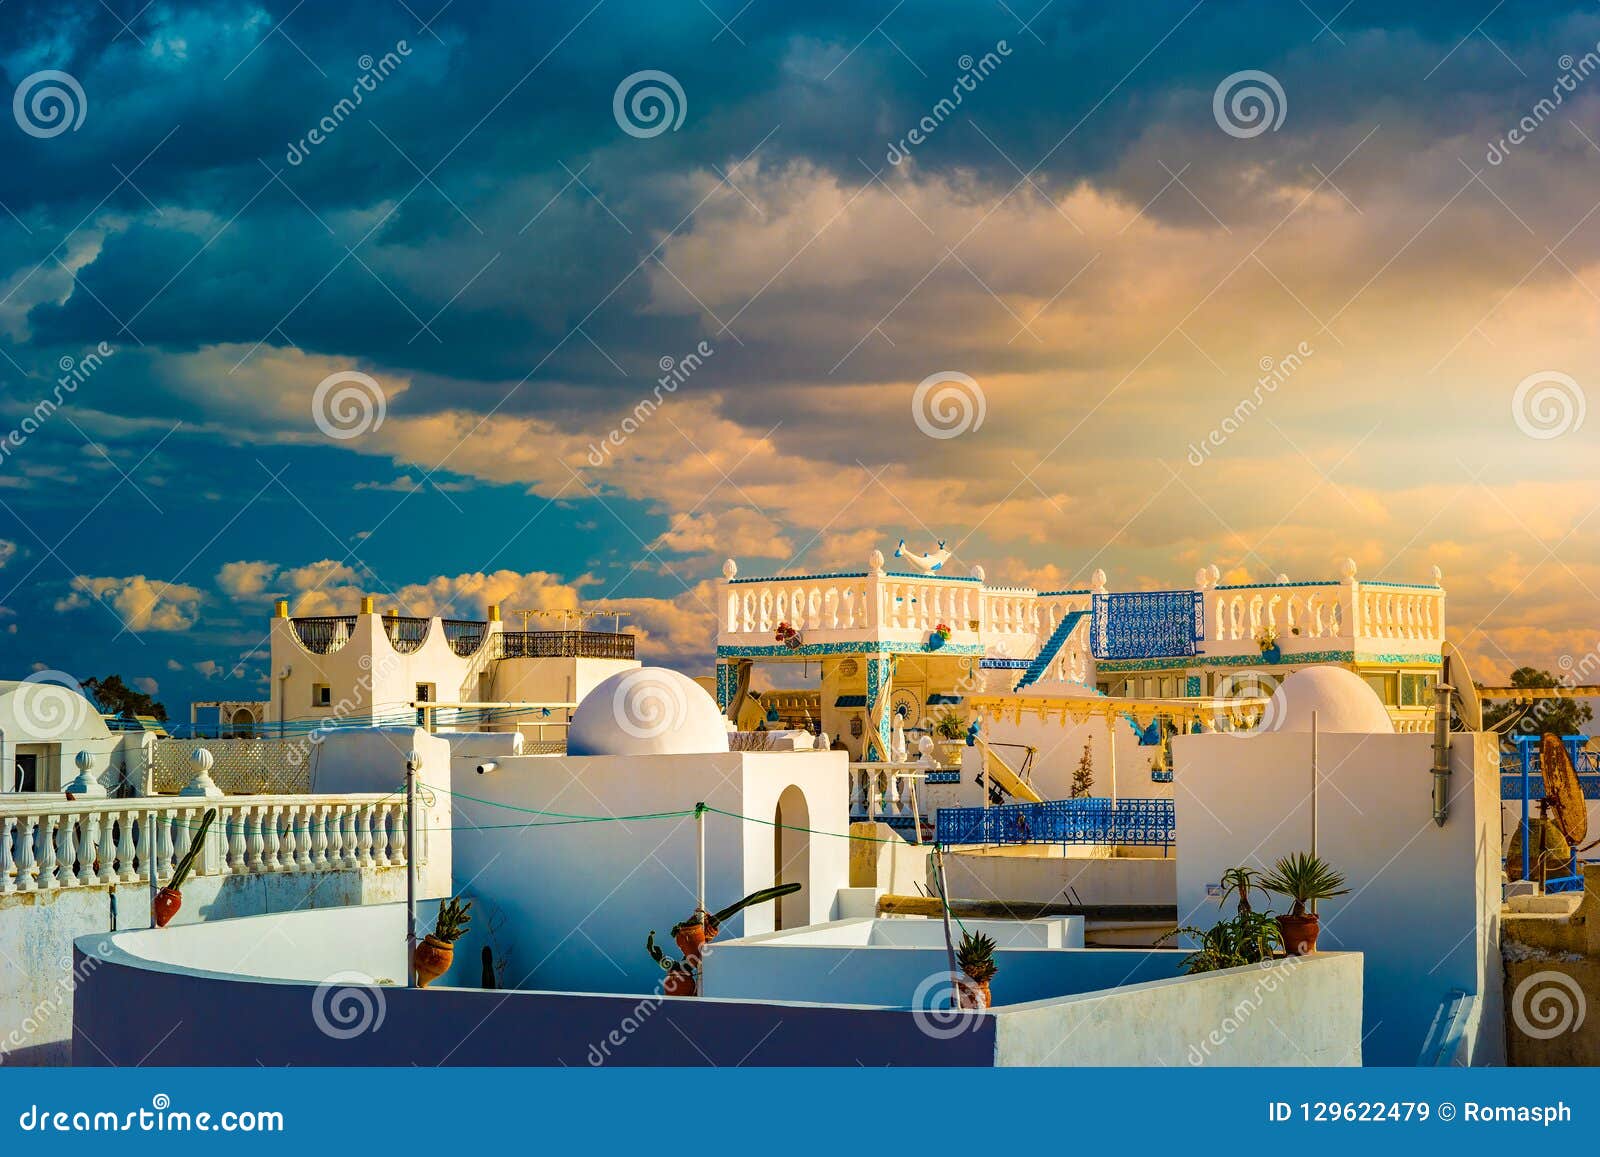 hammamet, tunisia. image of architecture of old medina